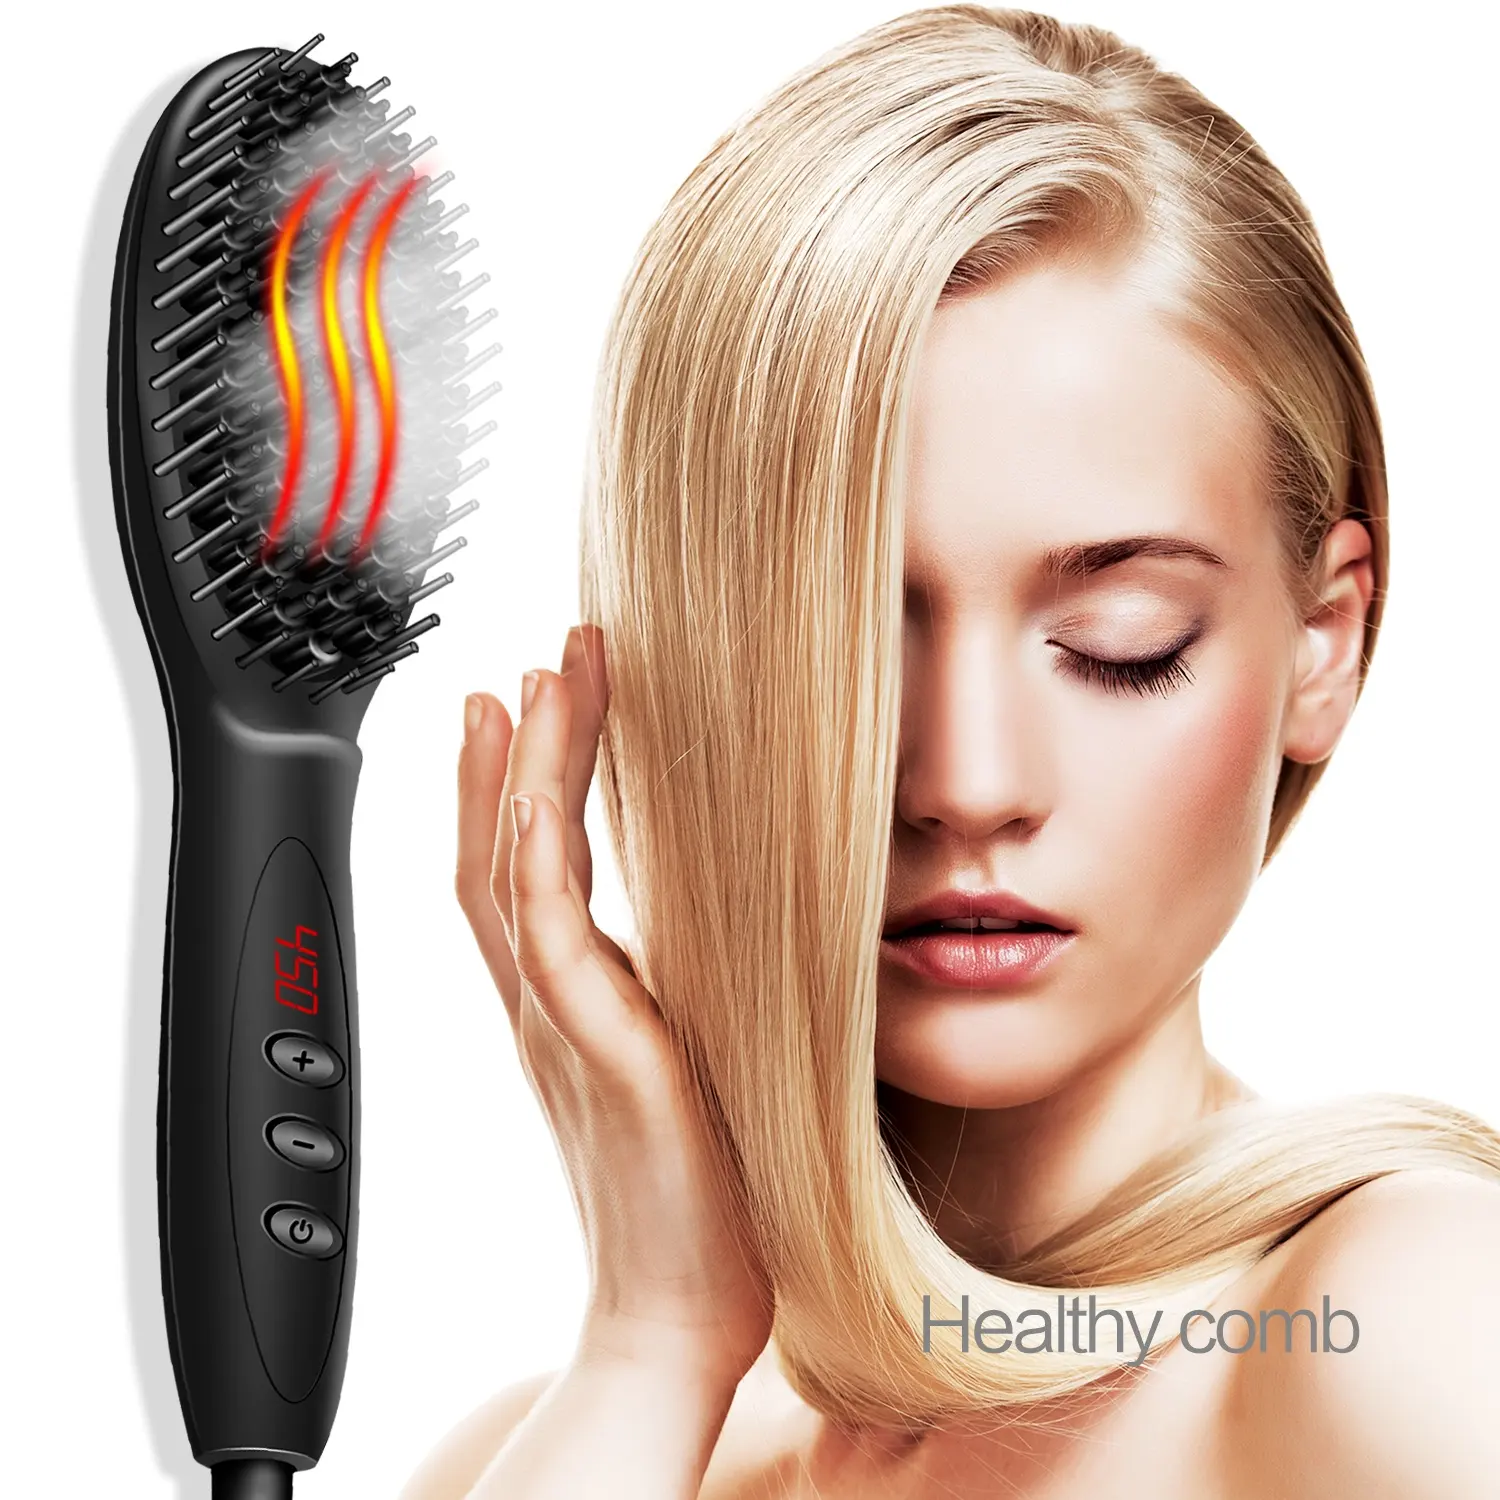 Biumart Beauty Salon Electric Hair Straightener Brush Handle Heated Quick Styler Hair Dryer Brush